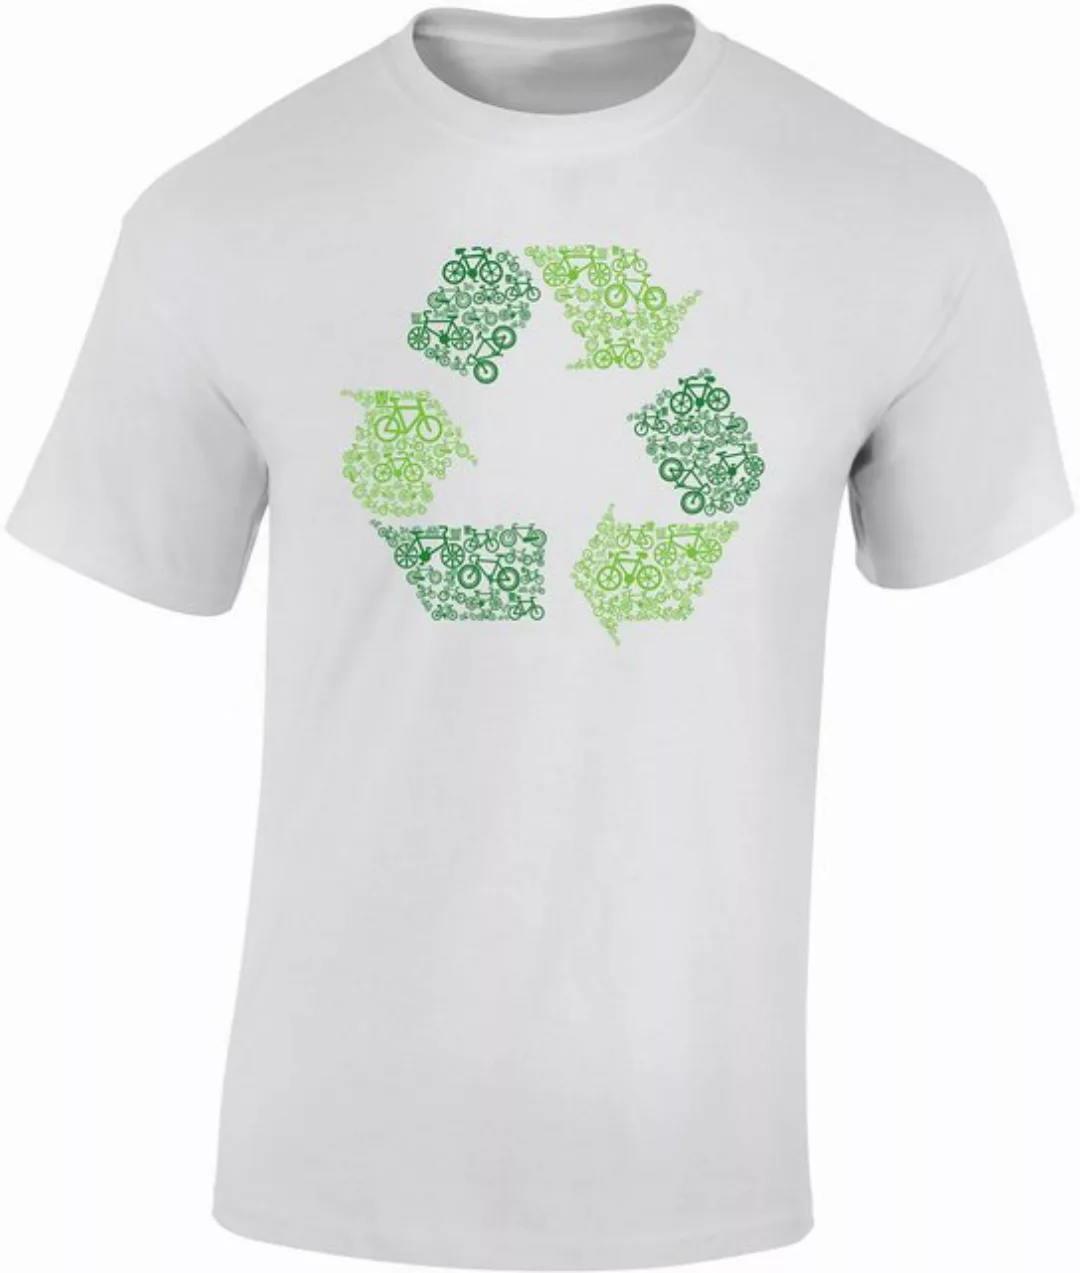 Baddery Print-Shirt Fahrrad T-Shirt: "Recycling? Re-Cycling!", hochwertiger günstig online kaufen